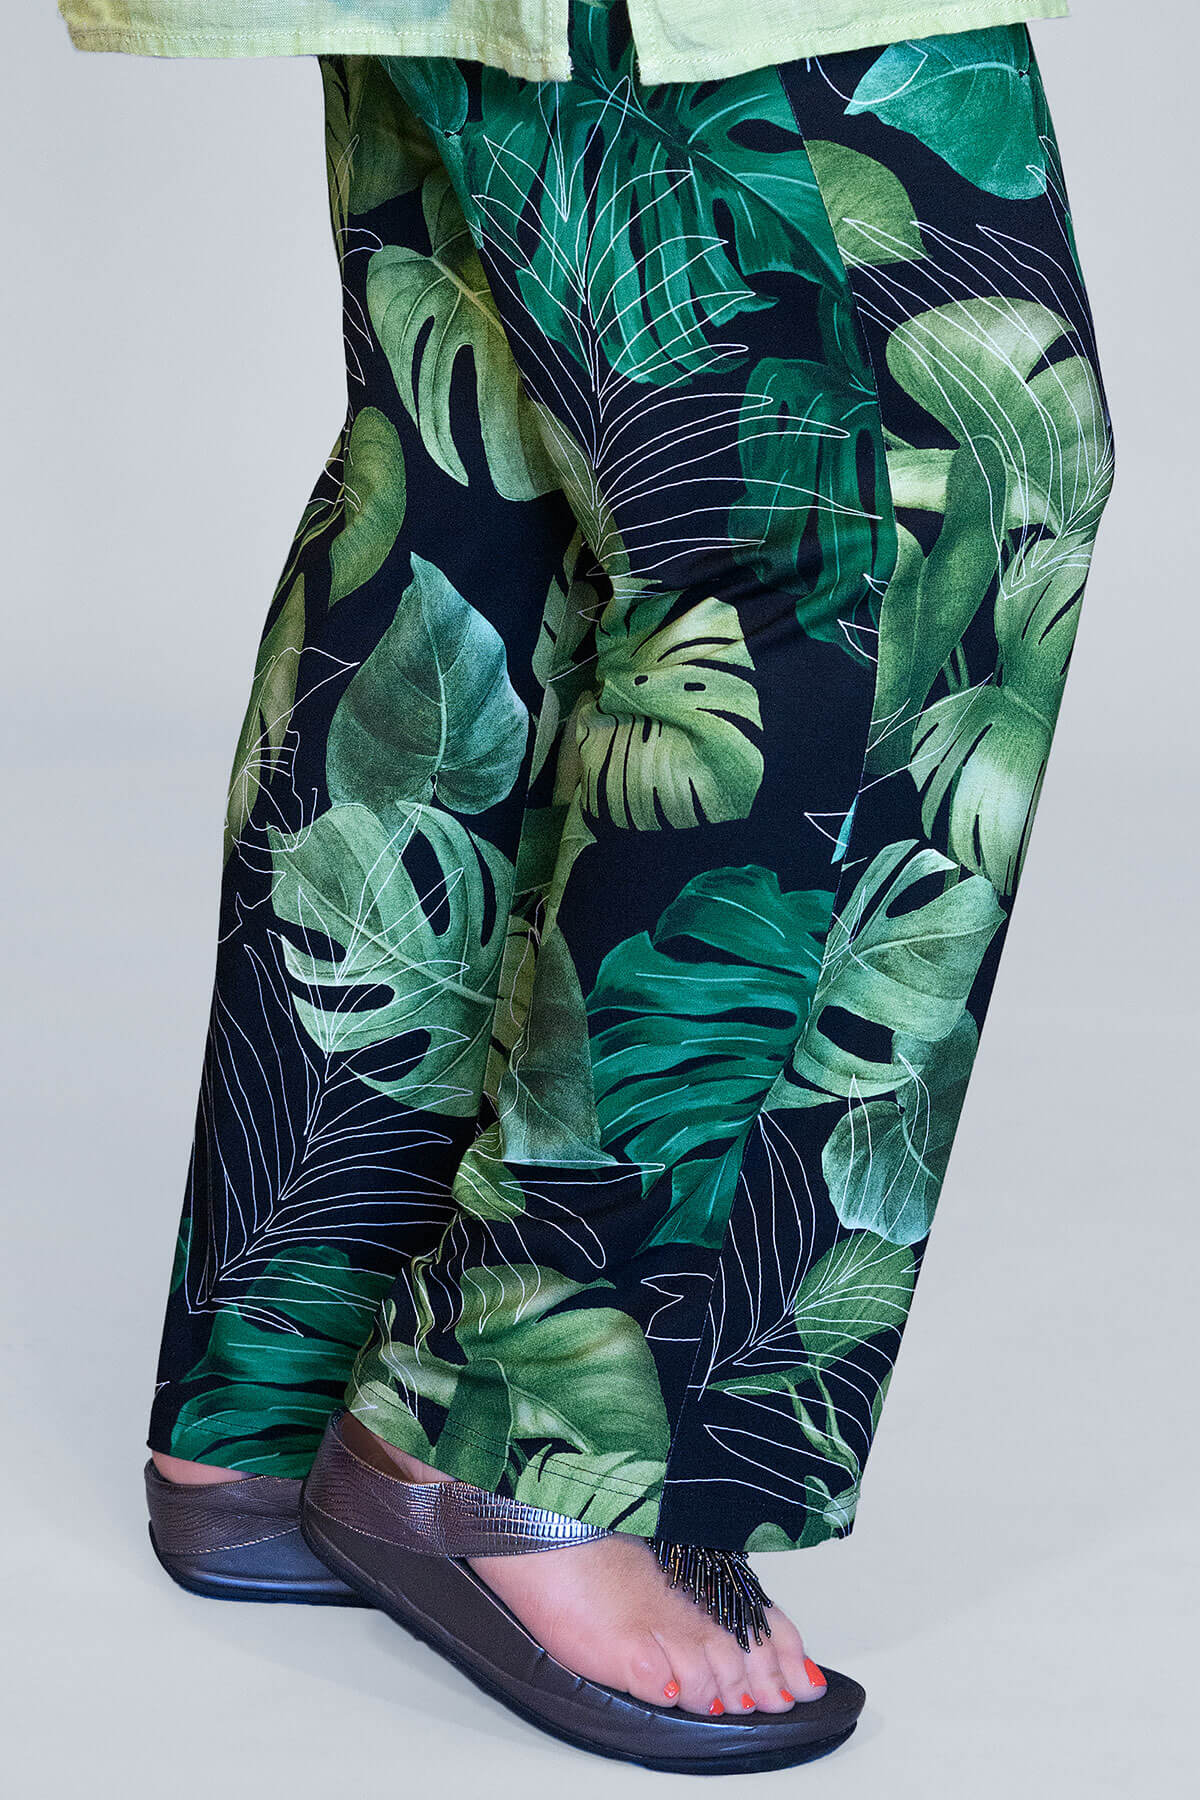 Doris Streich palm leaf trousers